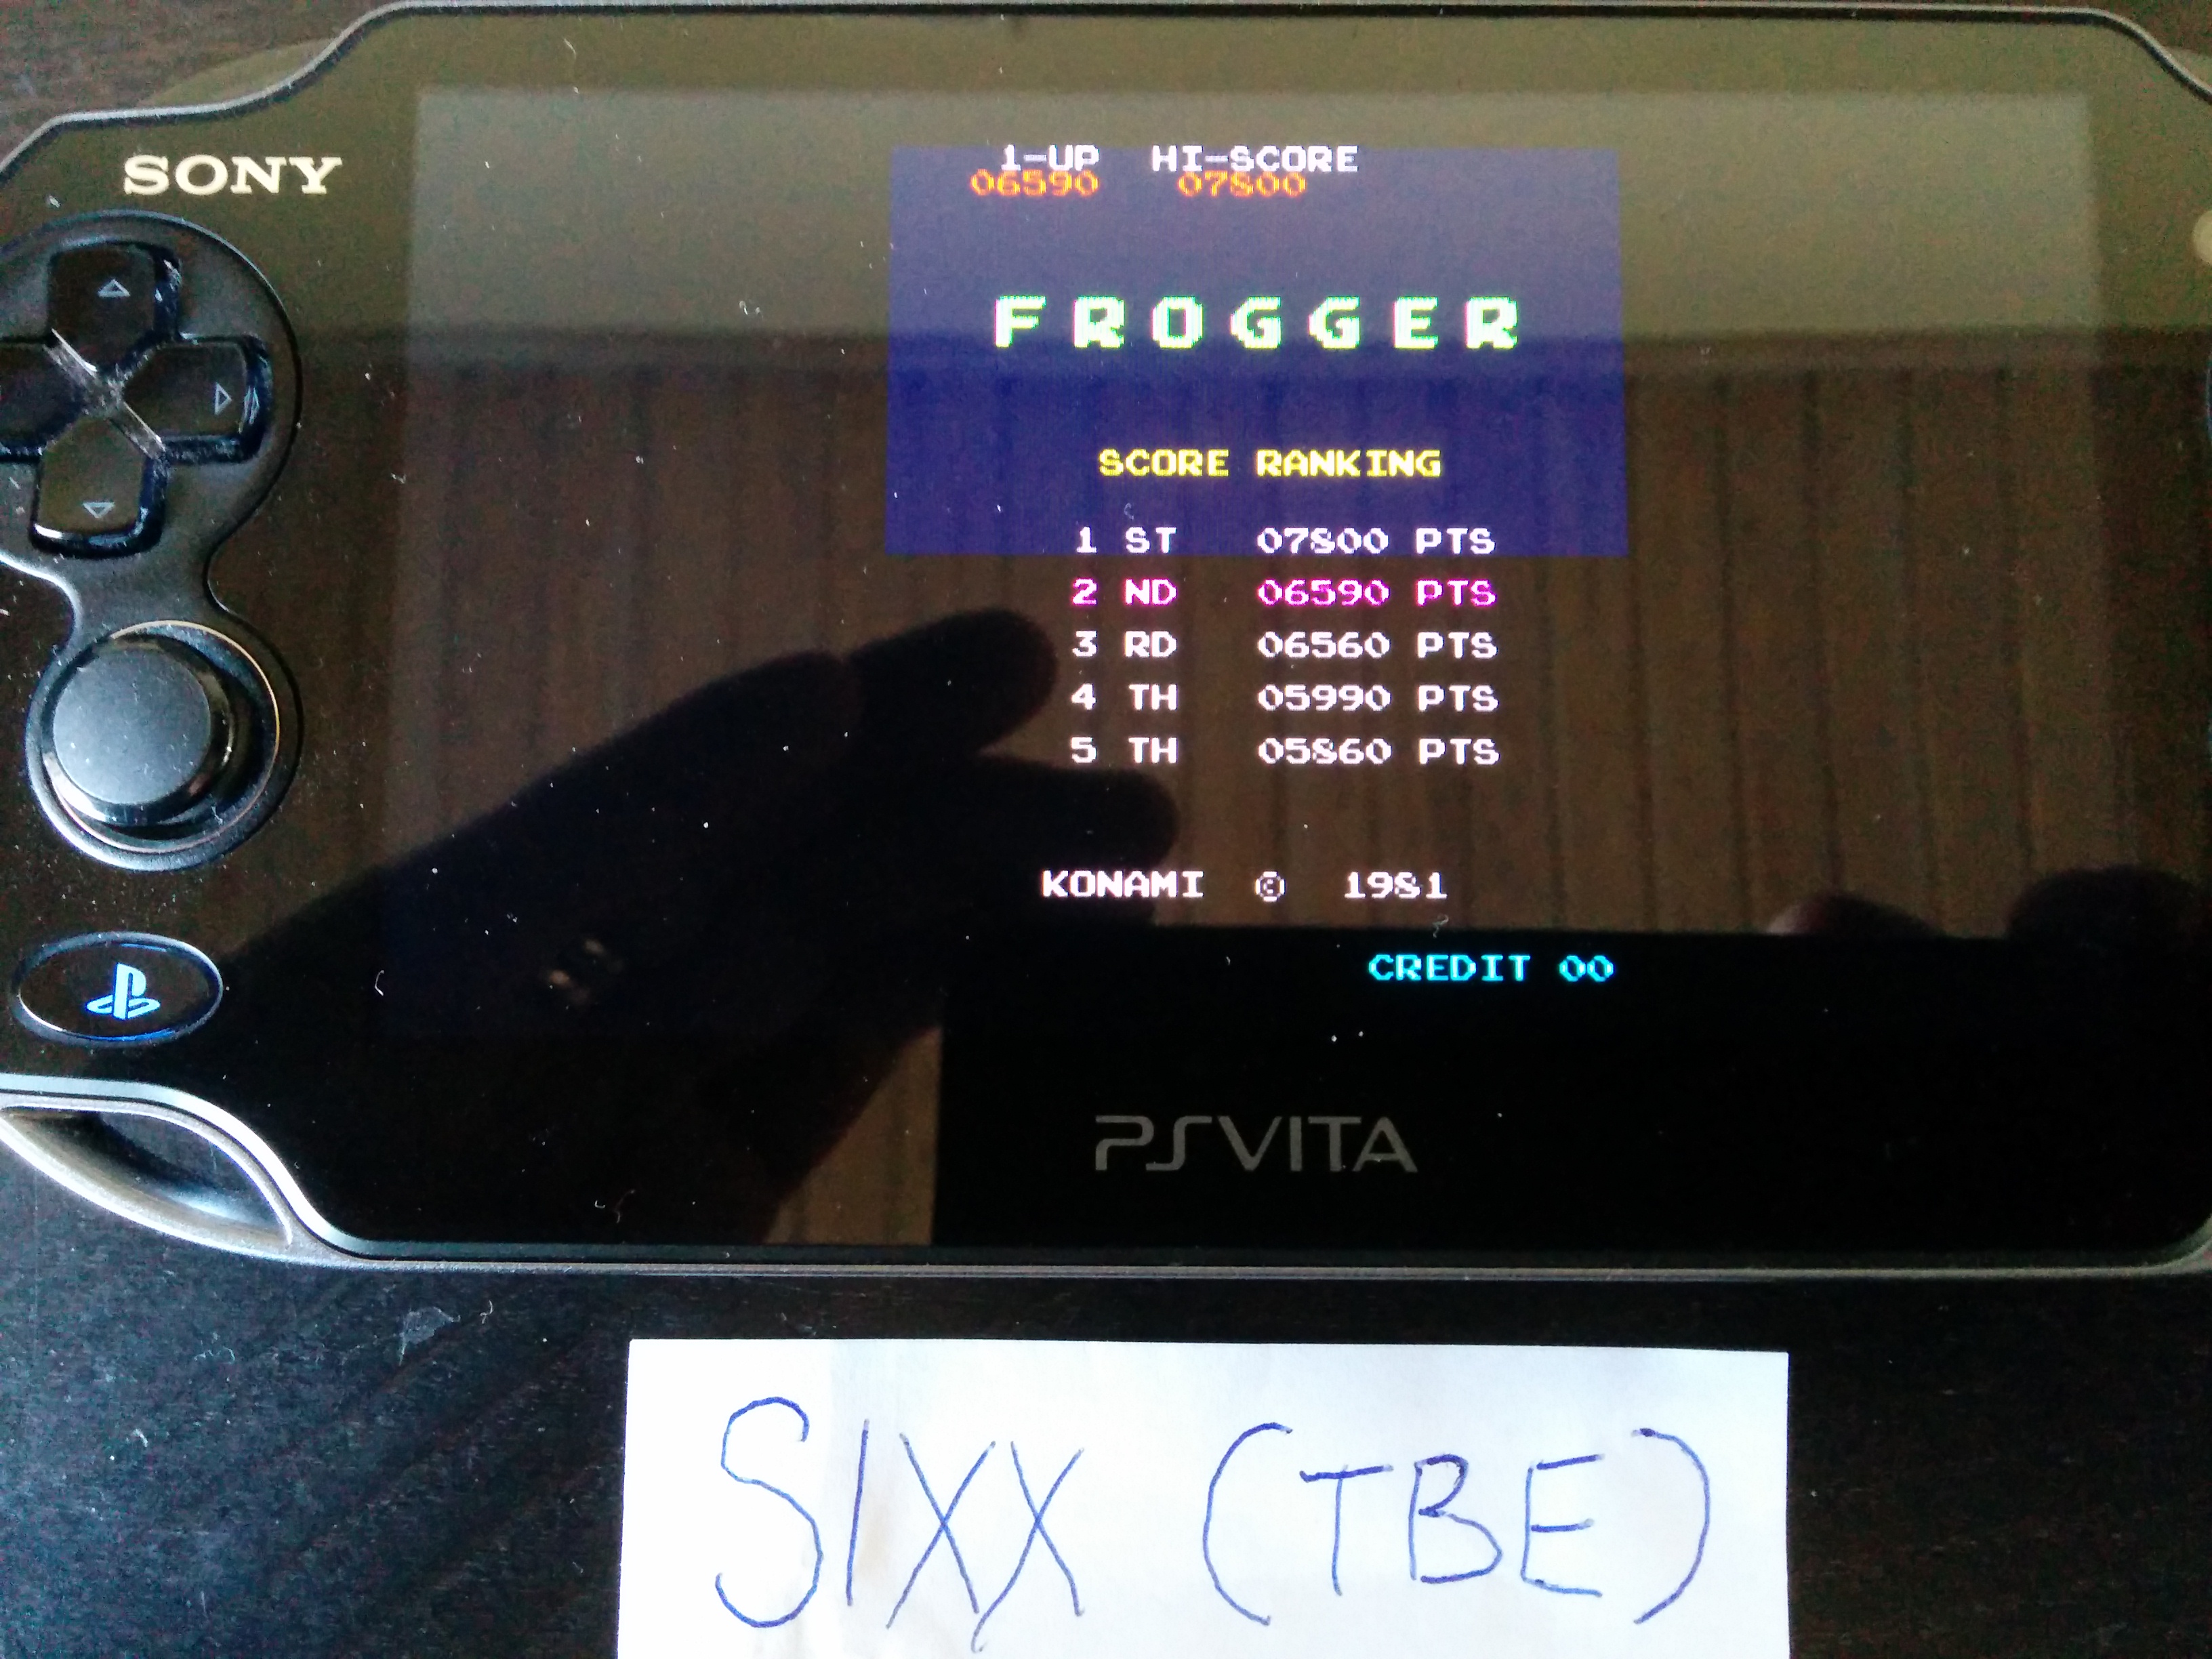 Sixx: Playstation Home Arcade: Frogger (PS Vita) 7,800 points on 2014-04-23 08:18:15